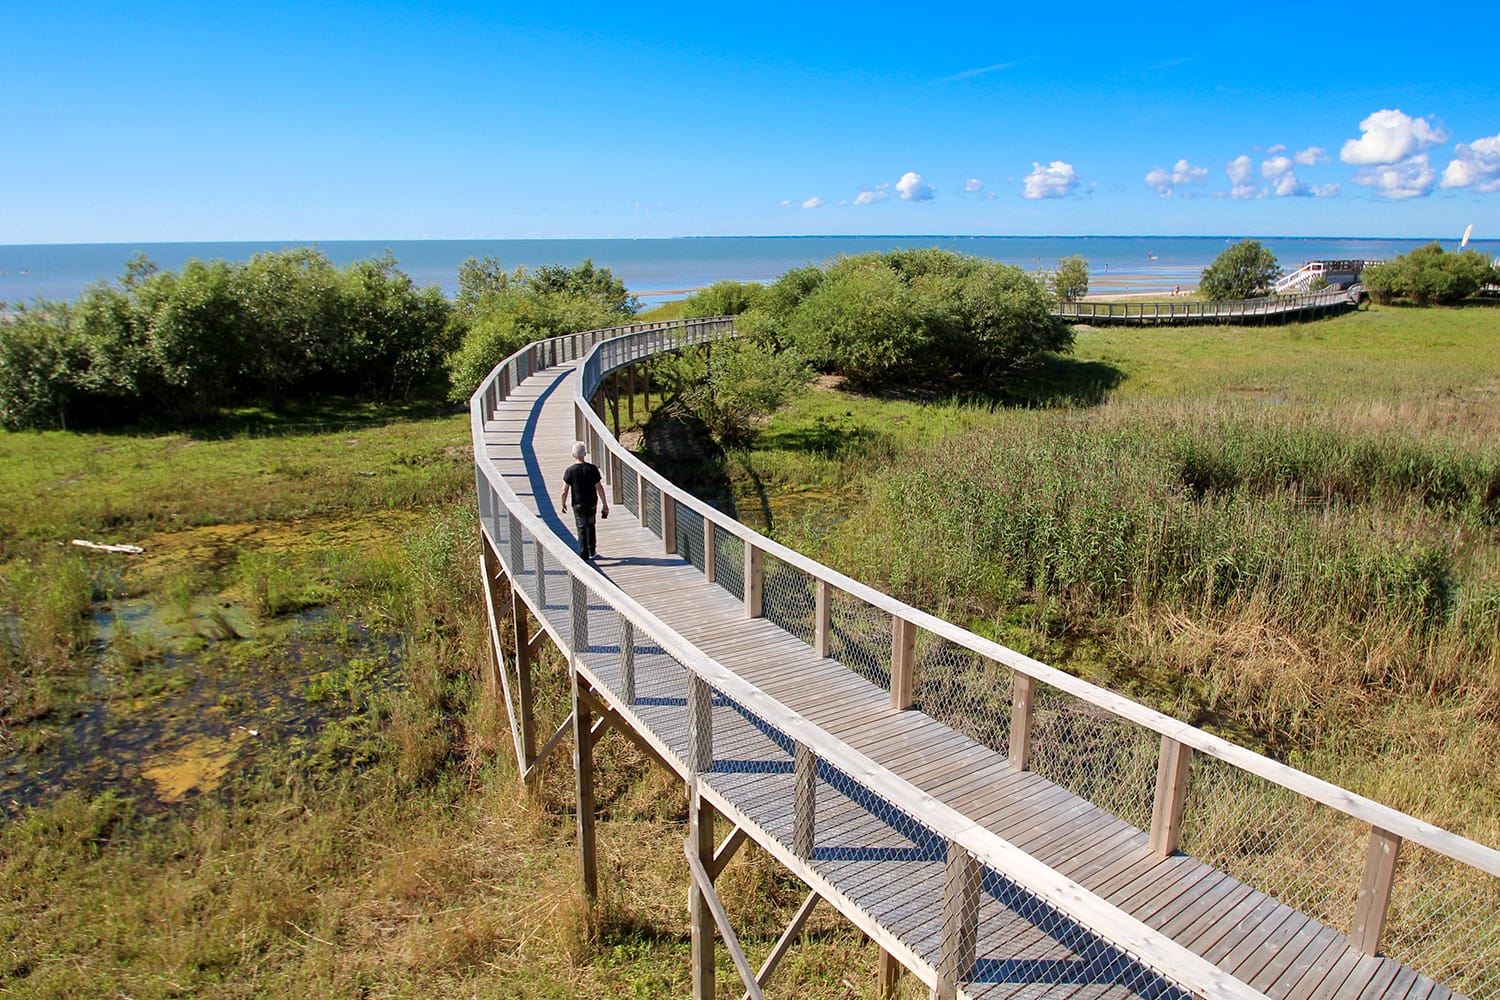 Observation platform and beach in Parnu, Estonia